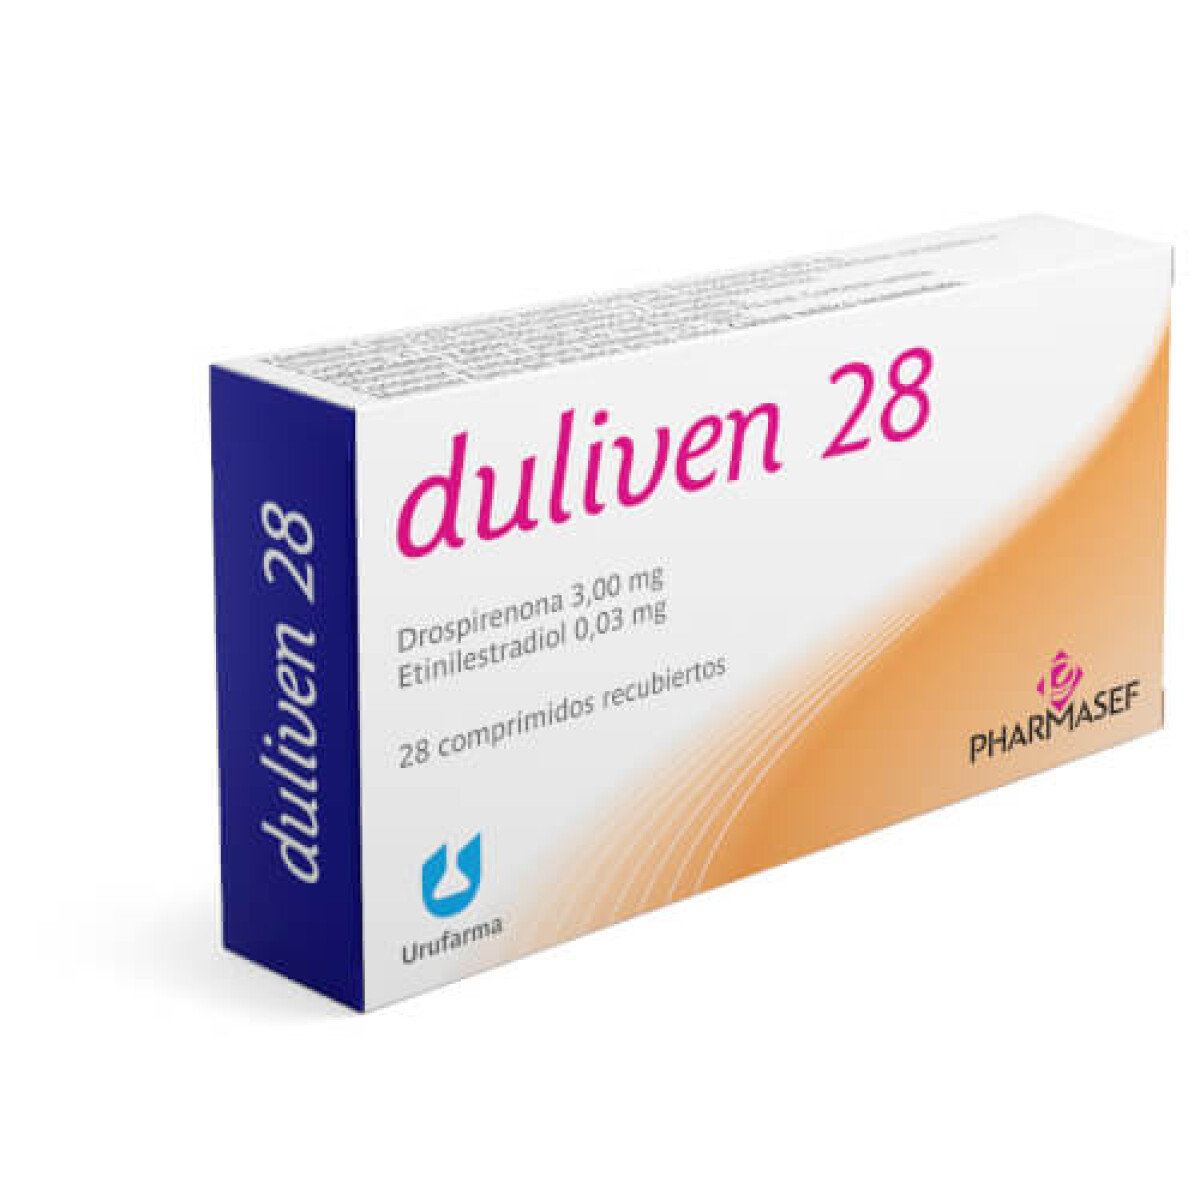 Duliven 28 comprimidos 